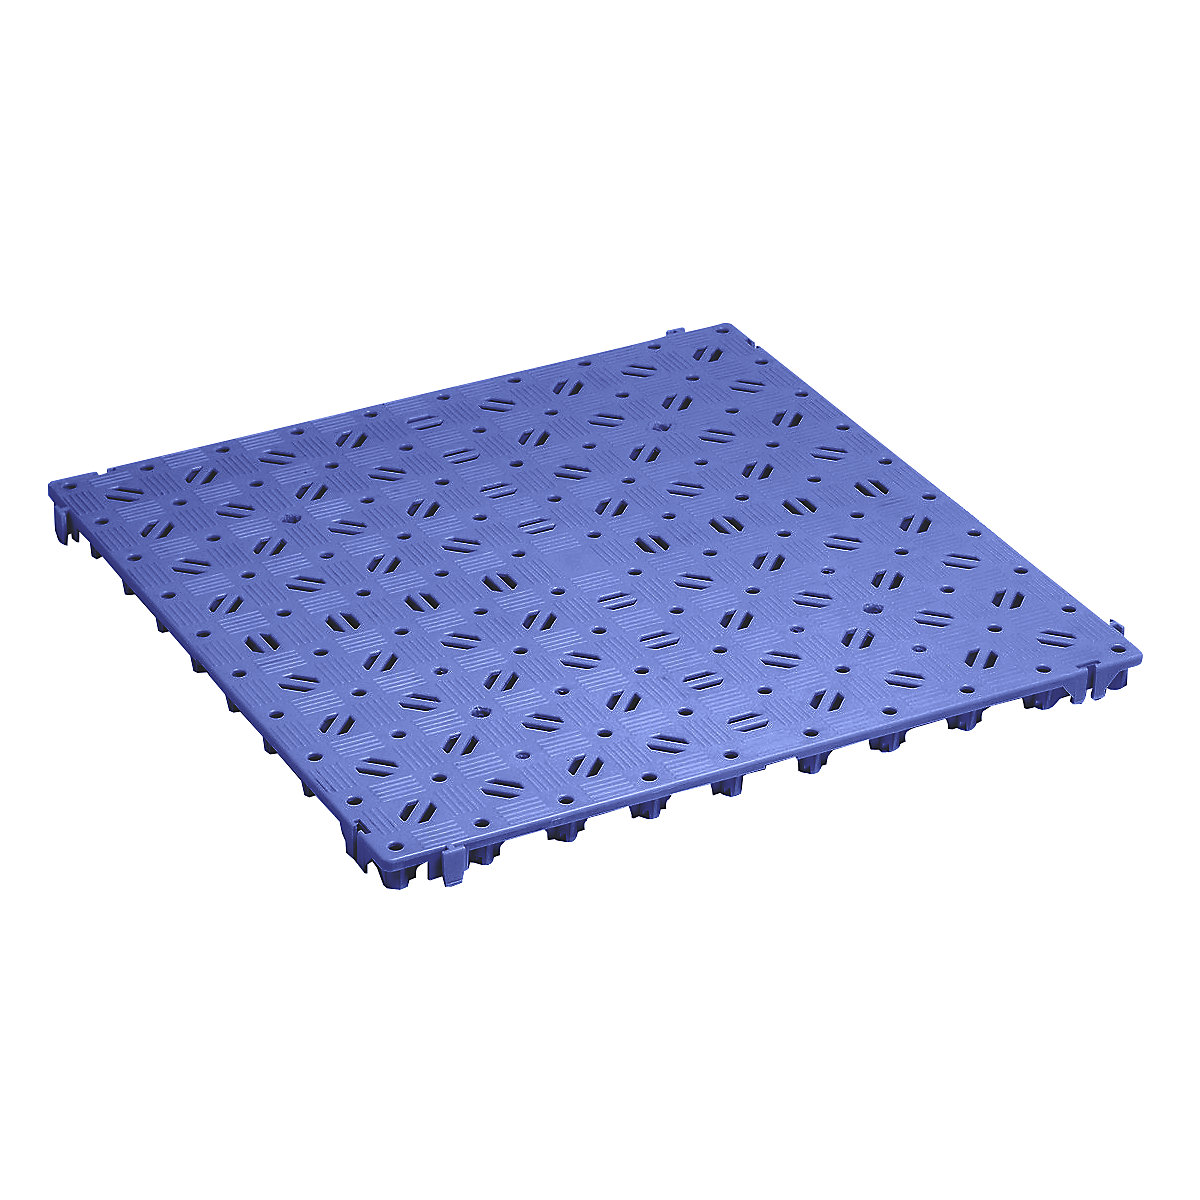 Plastic floor tile, polyethylene